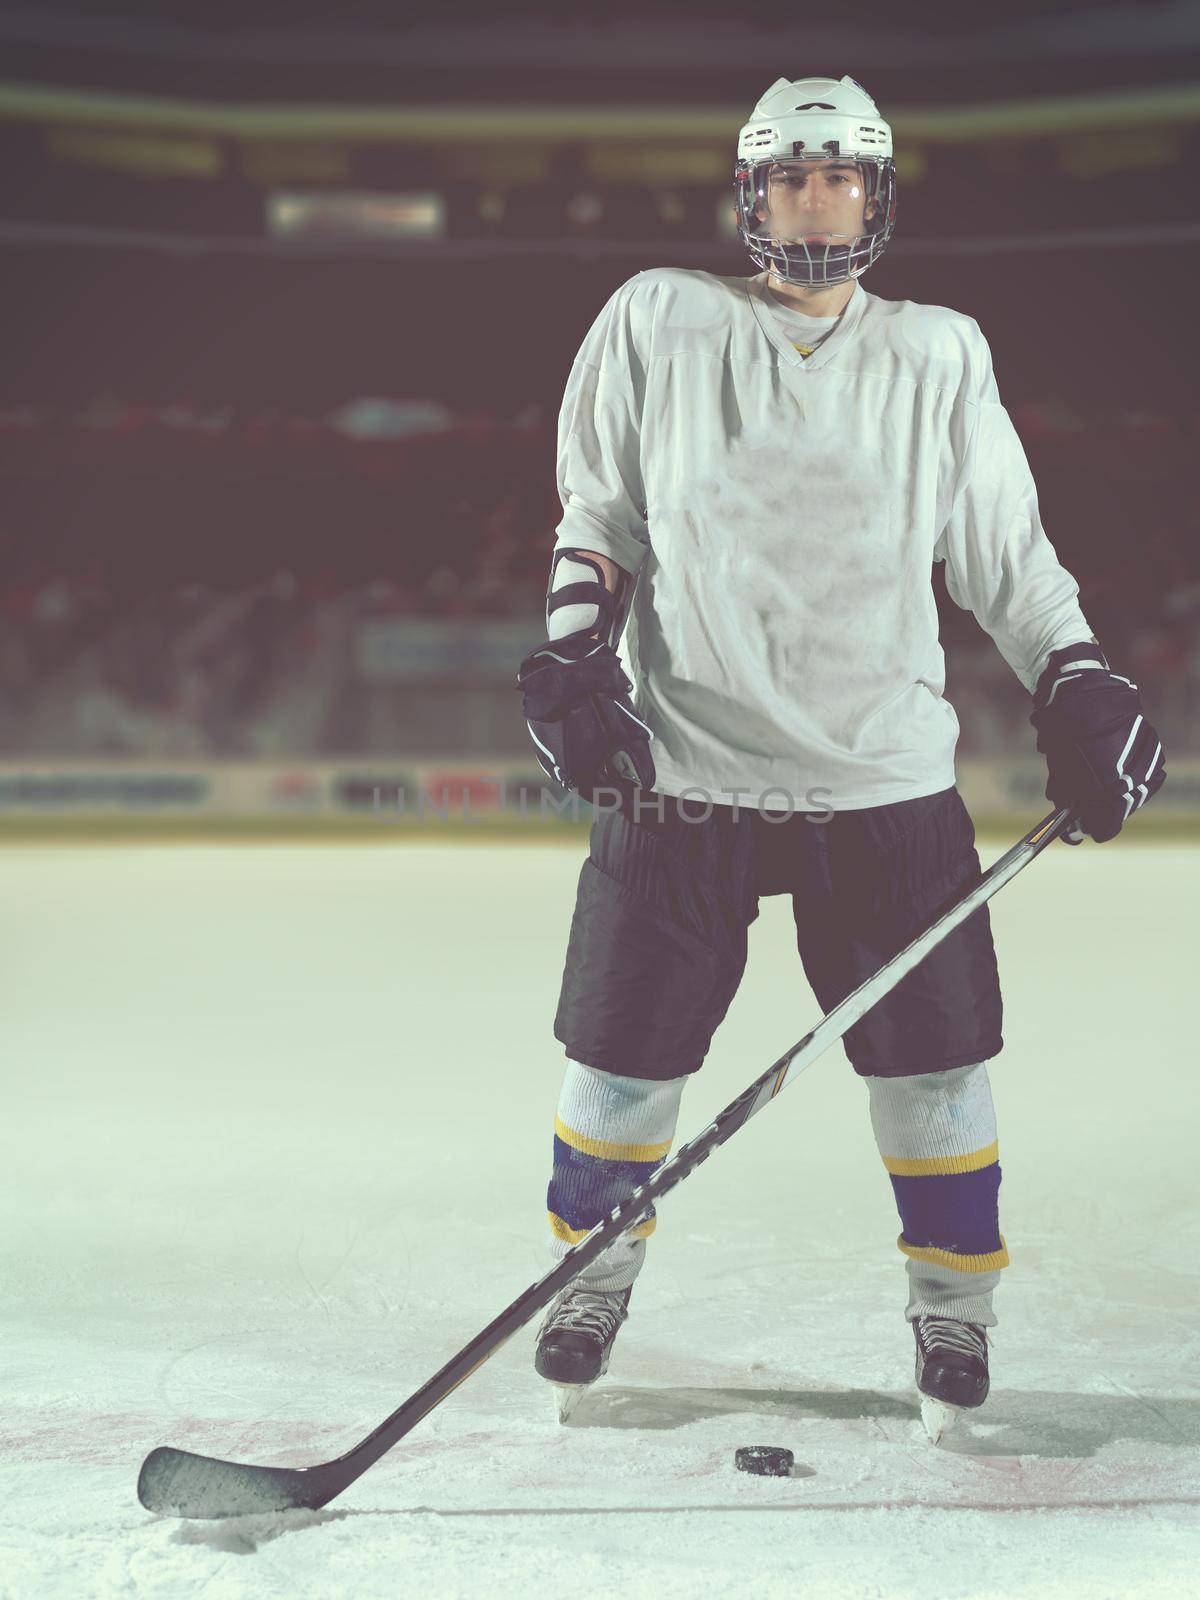 hockey player portrait by dotshock